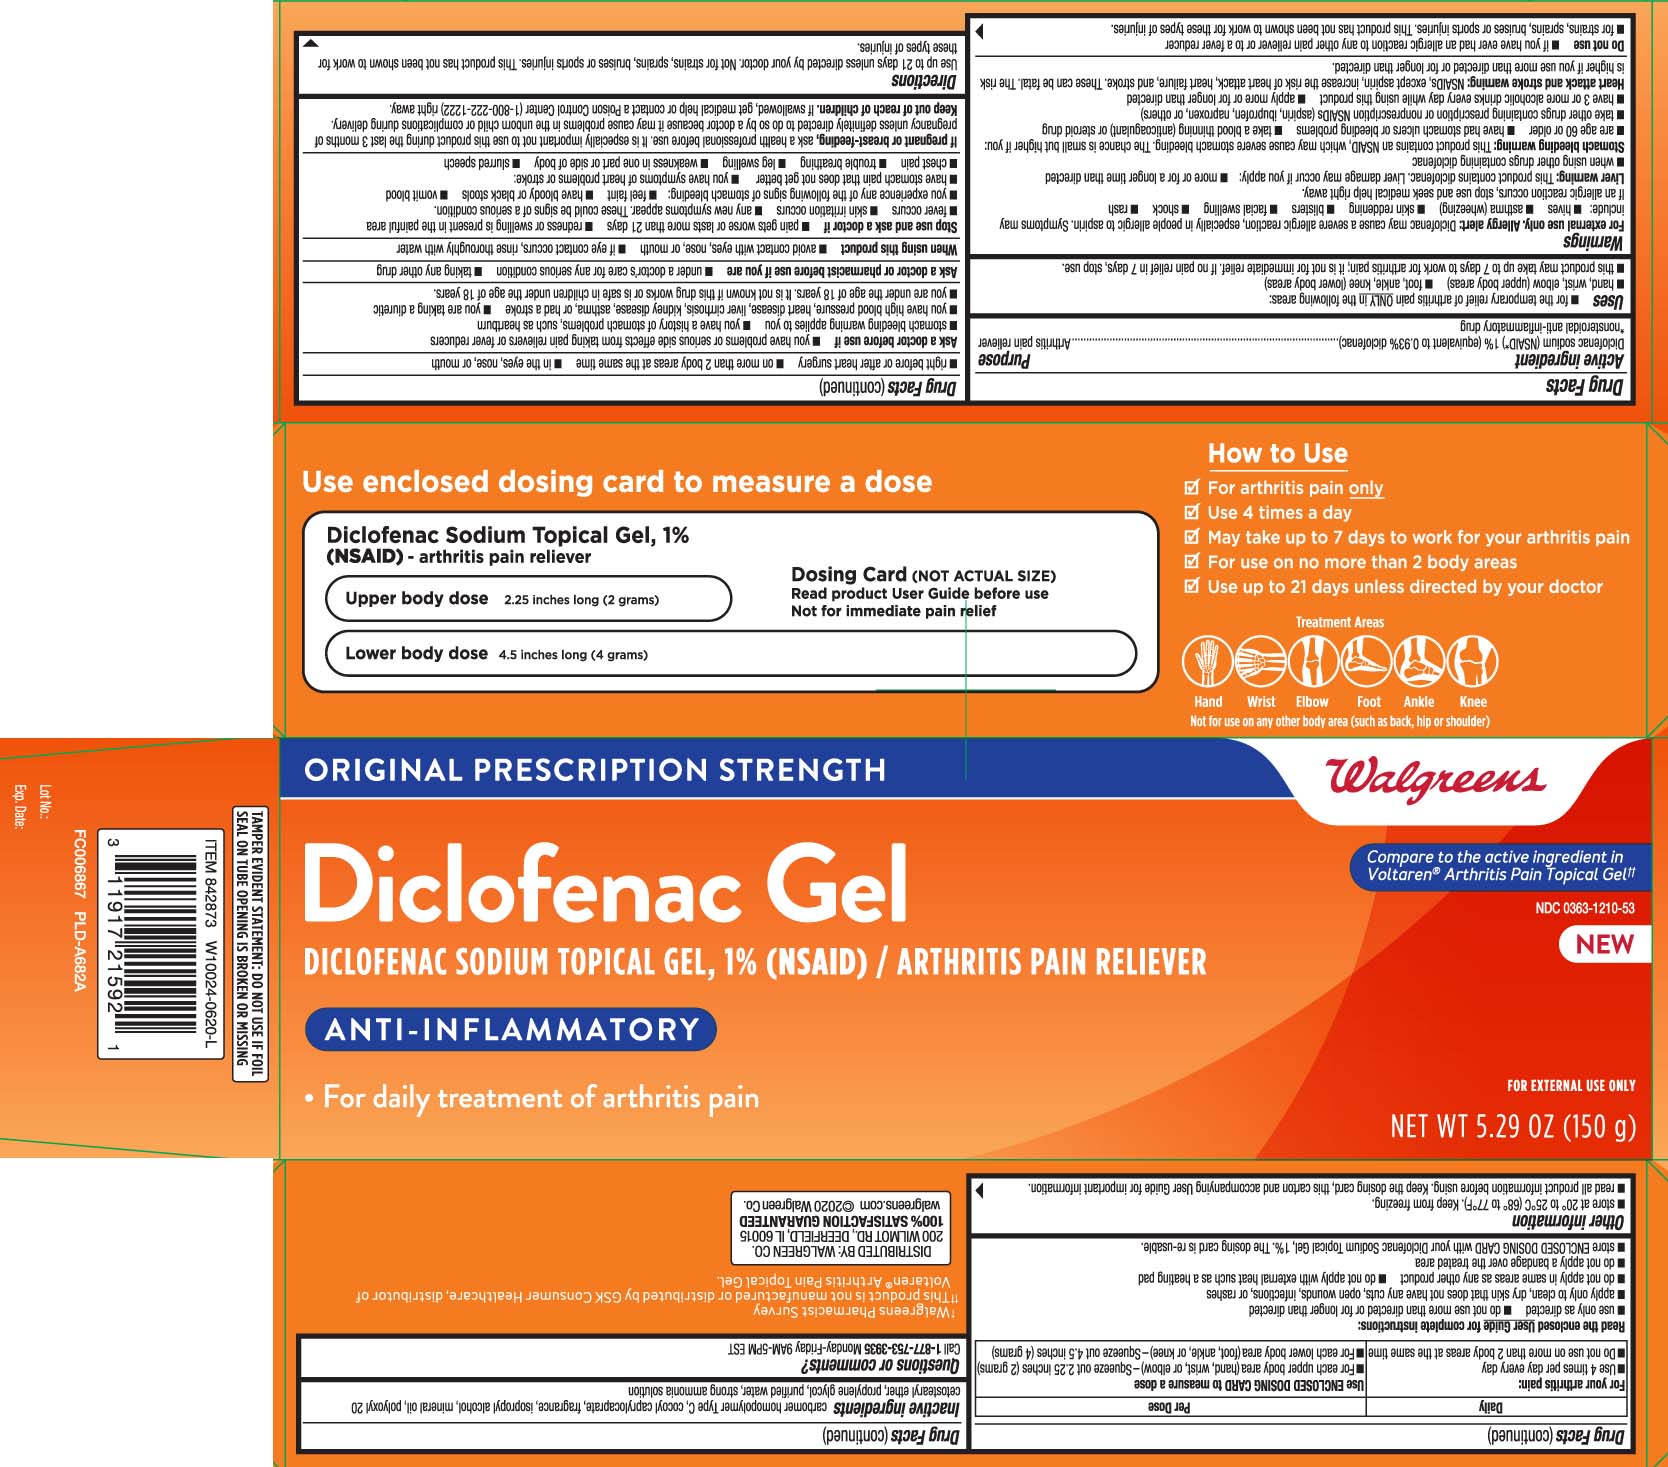 Diclofenac sodium (NSAID*) 1% (equivalent to 0.93% diclofenac) *nonsteroidal anti-inflammatory drug